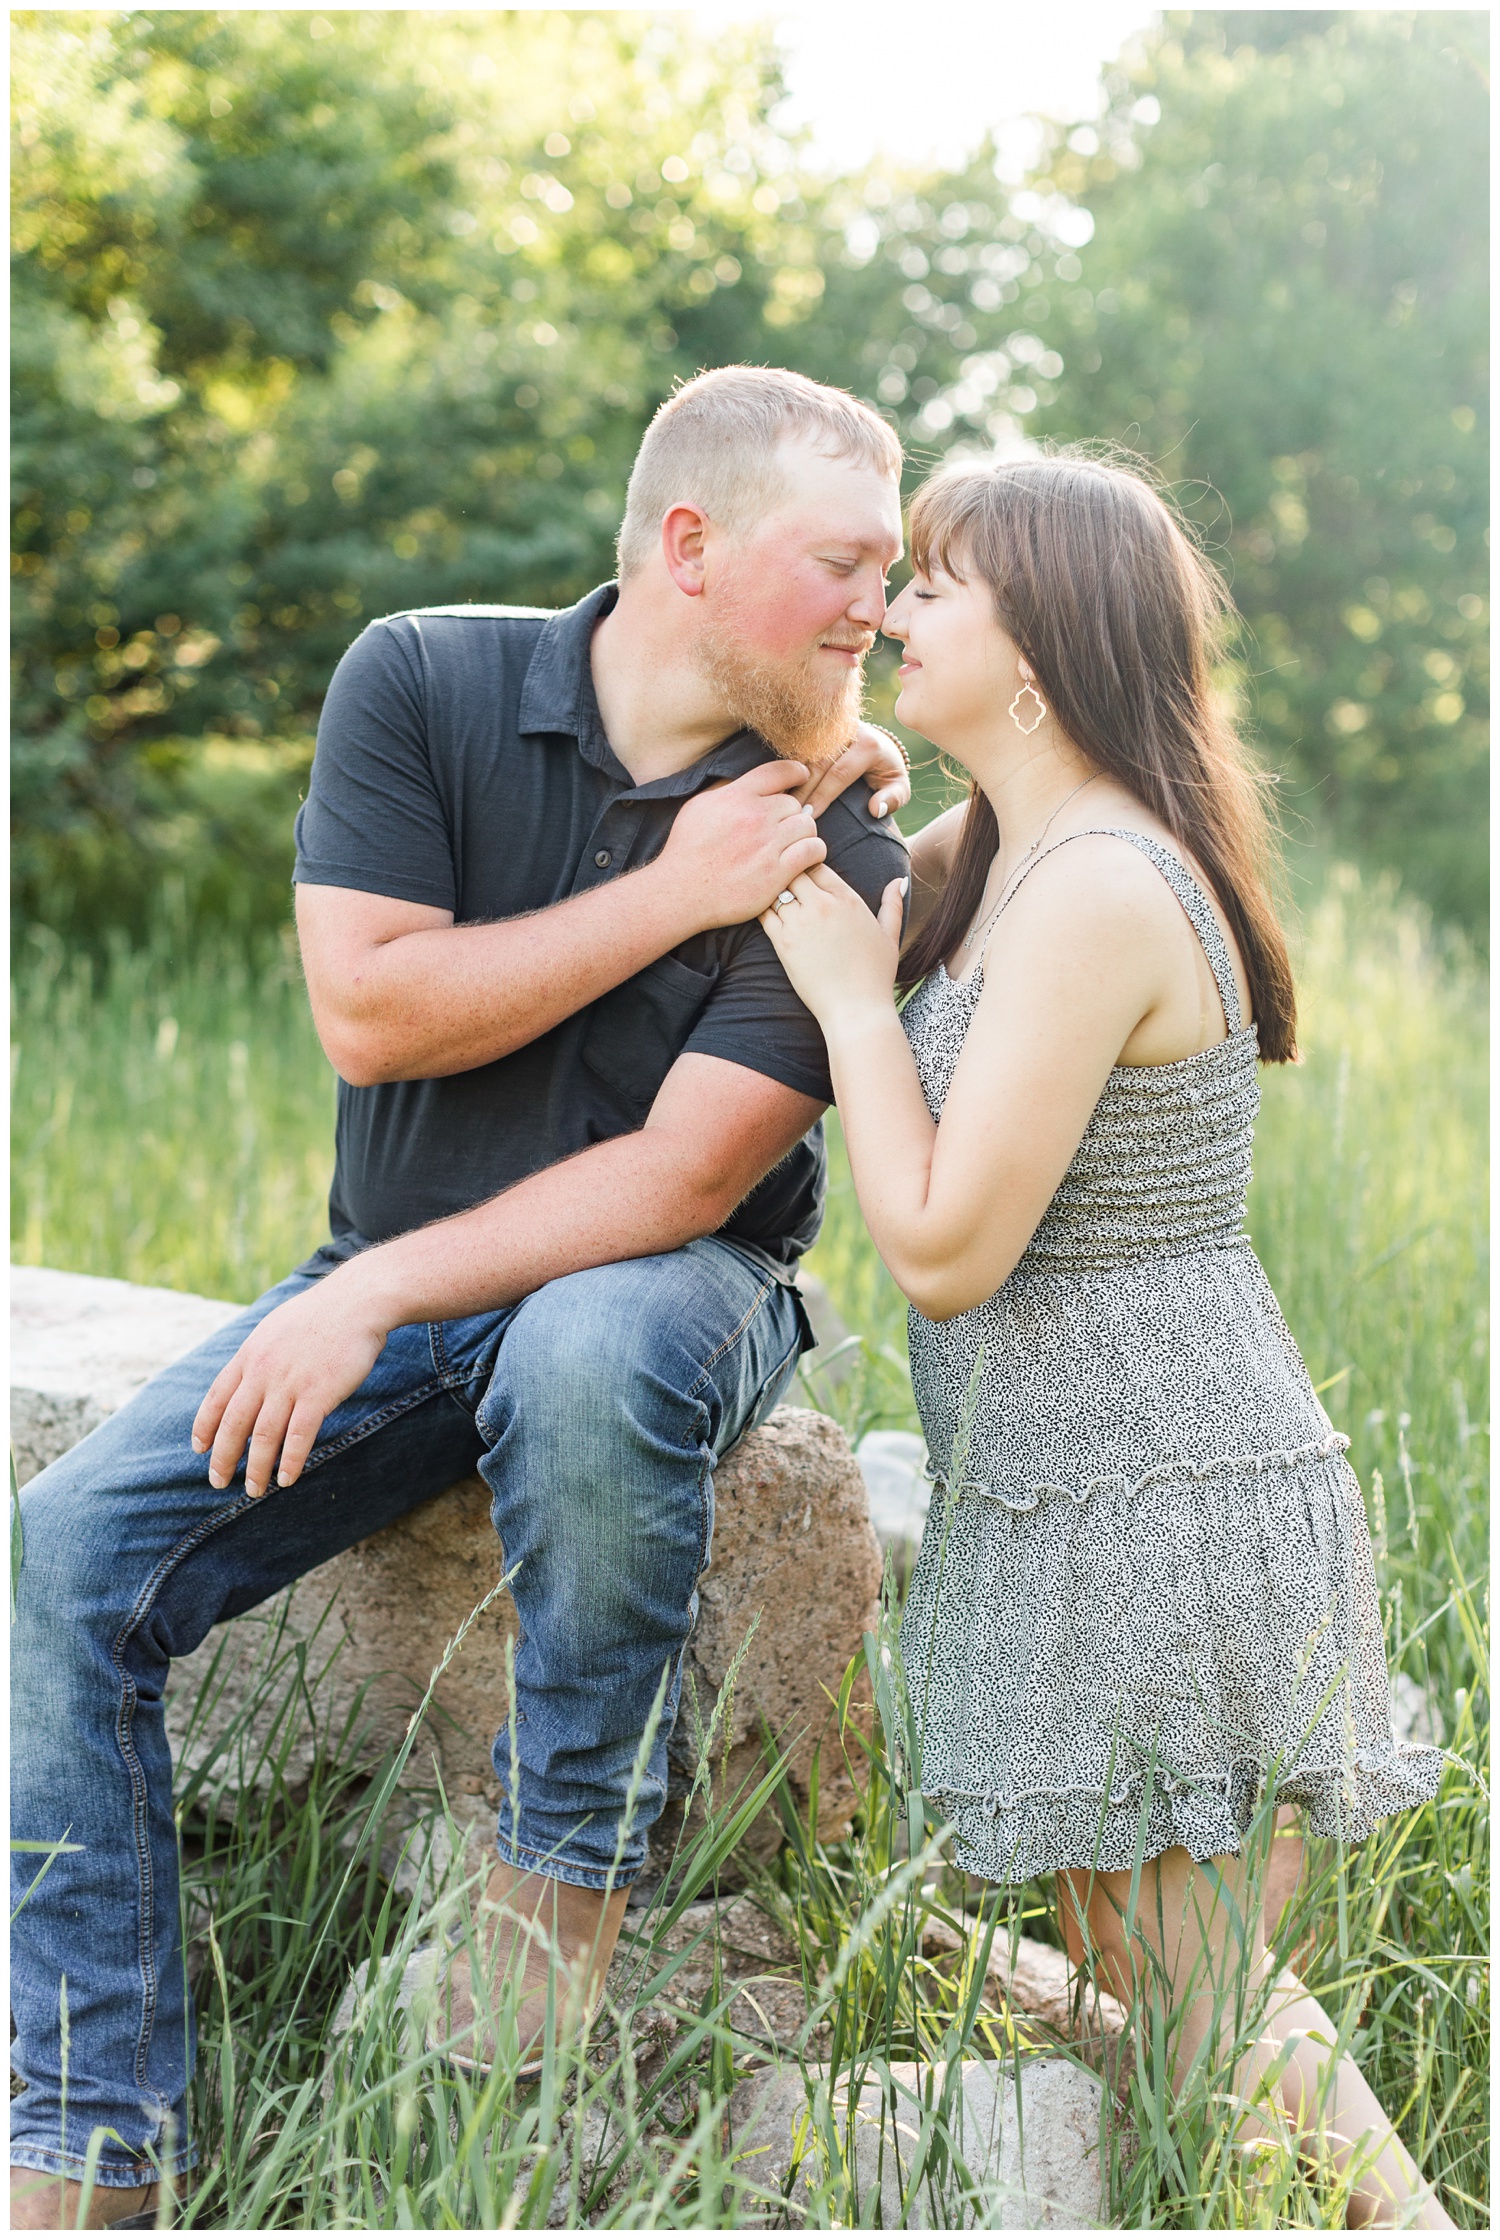 Jeremiah and Madeline share eskimo kisses in a grassy pasture in Iowa | CB Studio